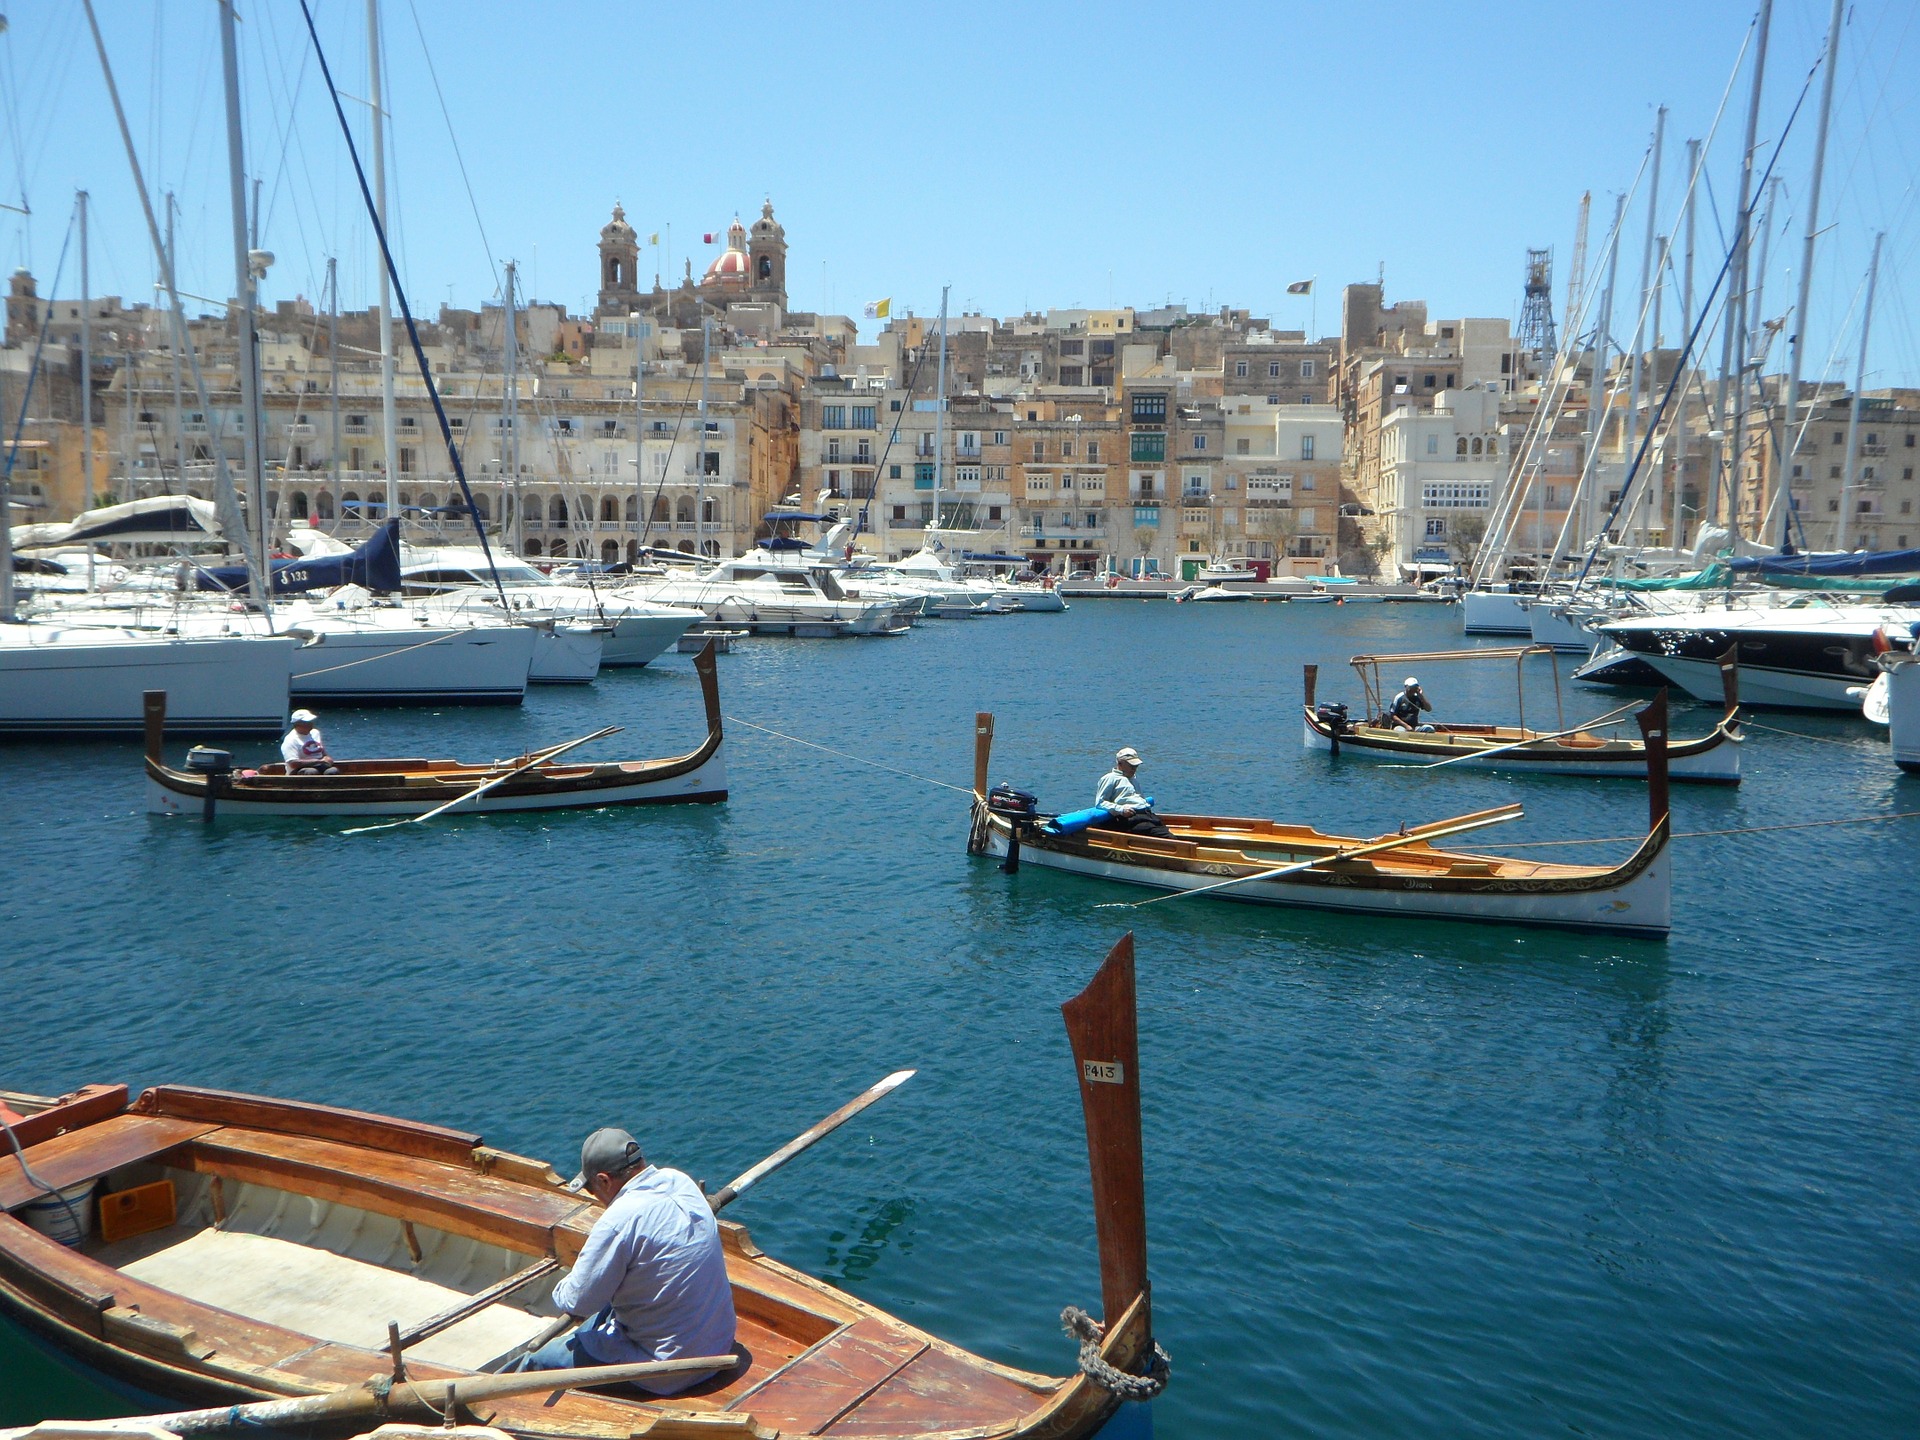 Malta Travel and Tourism Act